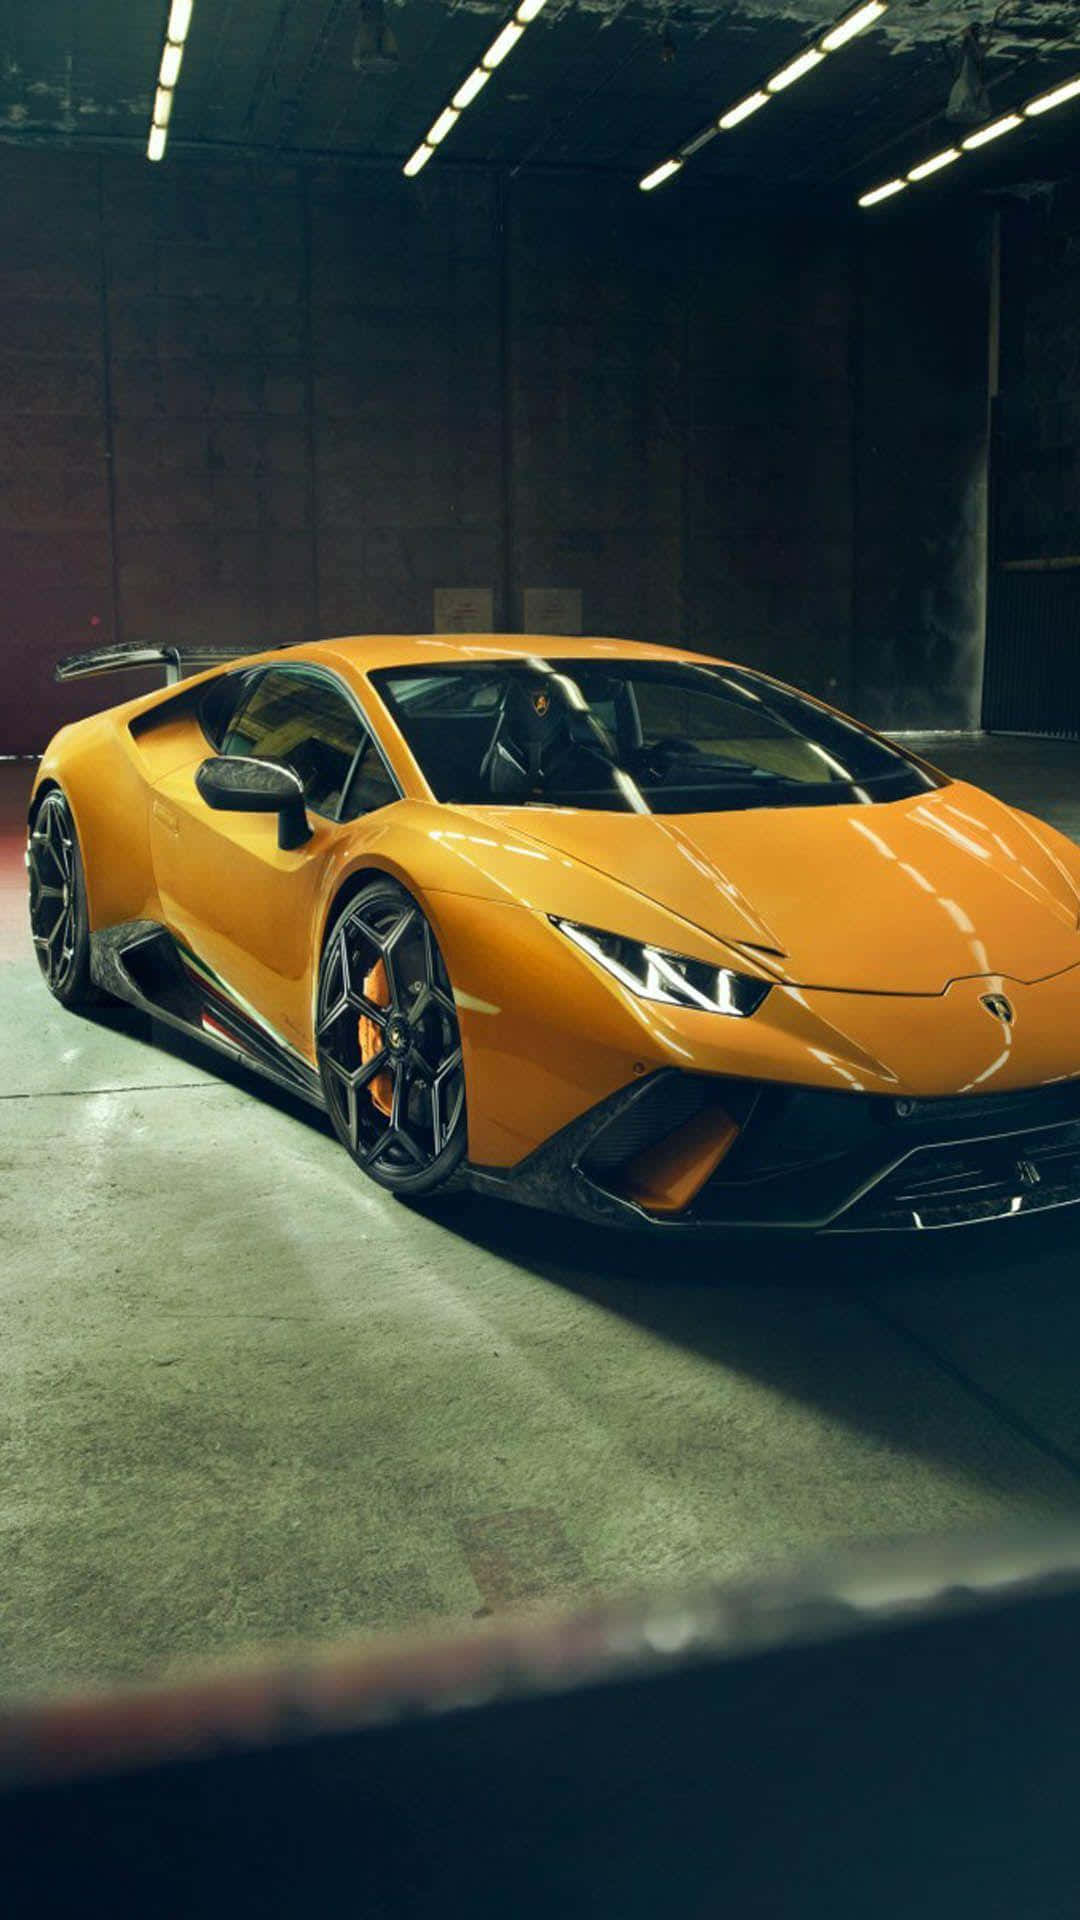 The Stylish and Powerful Lamborghini Phone Wallpaper